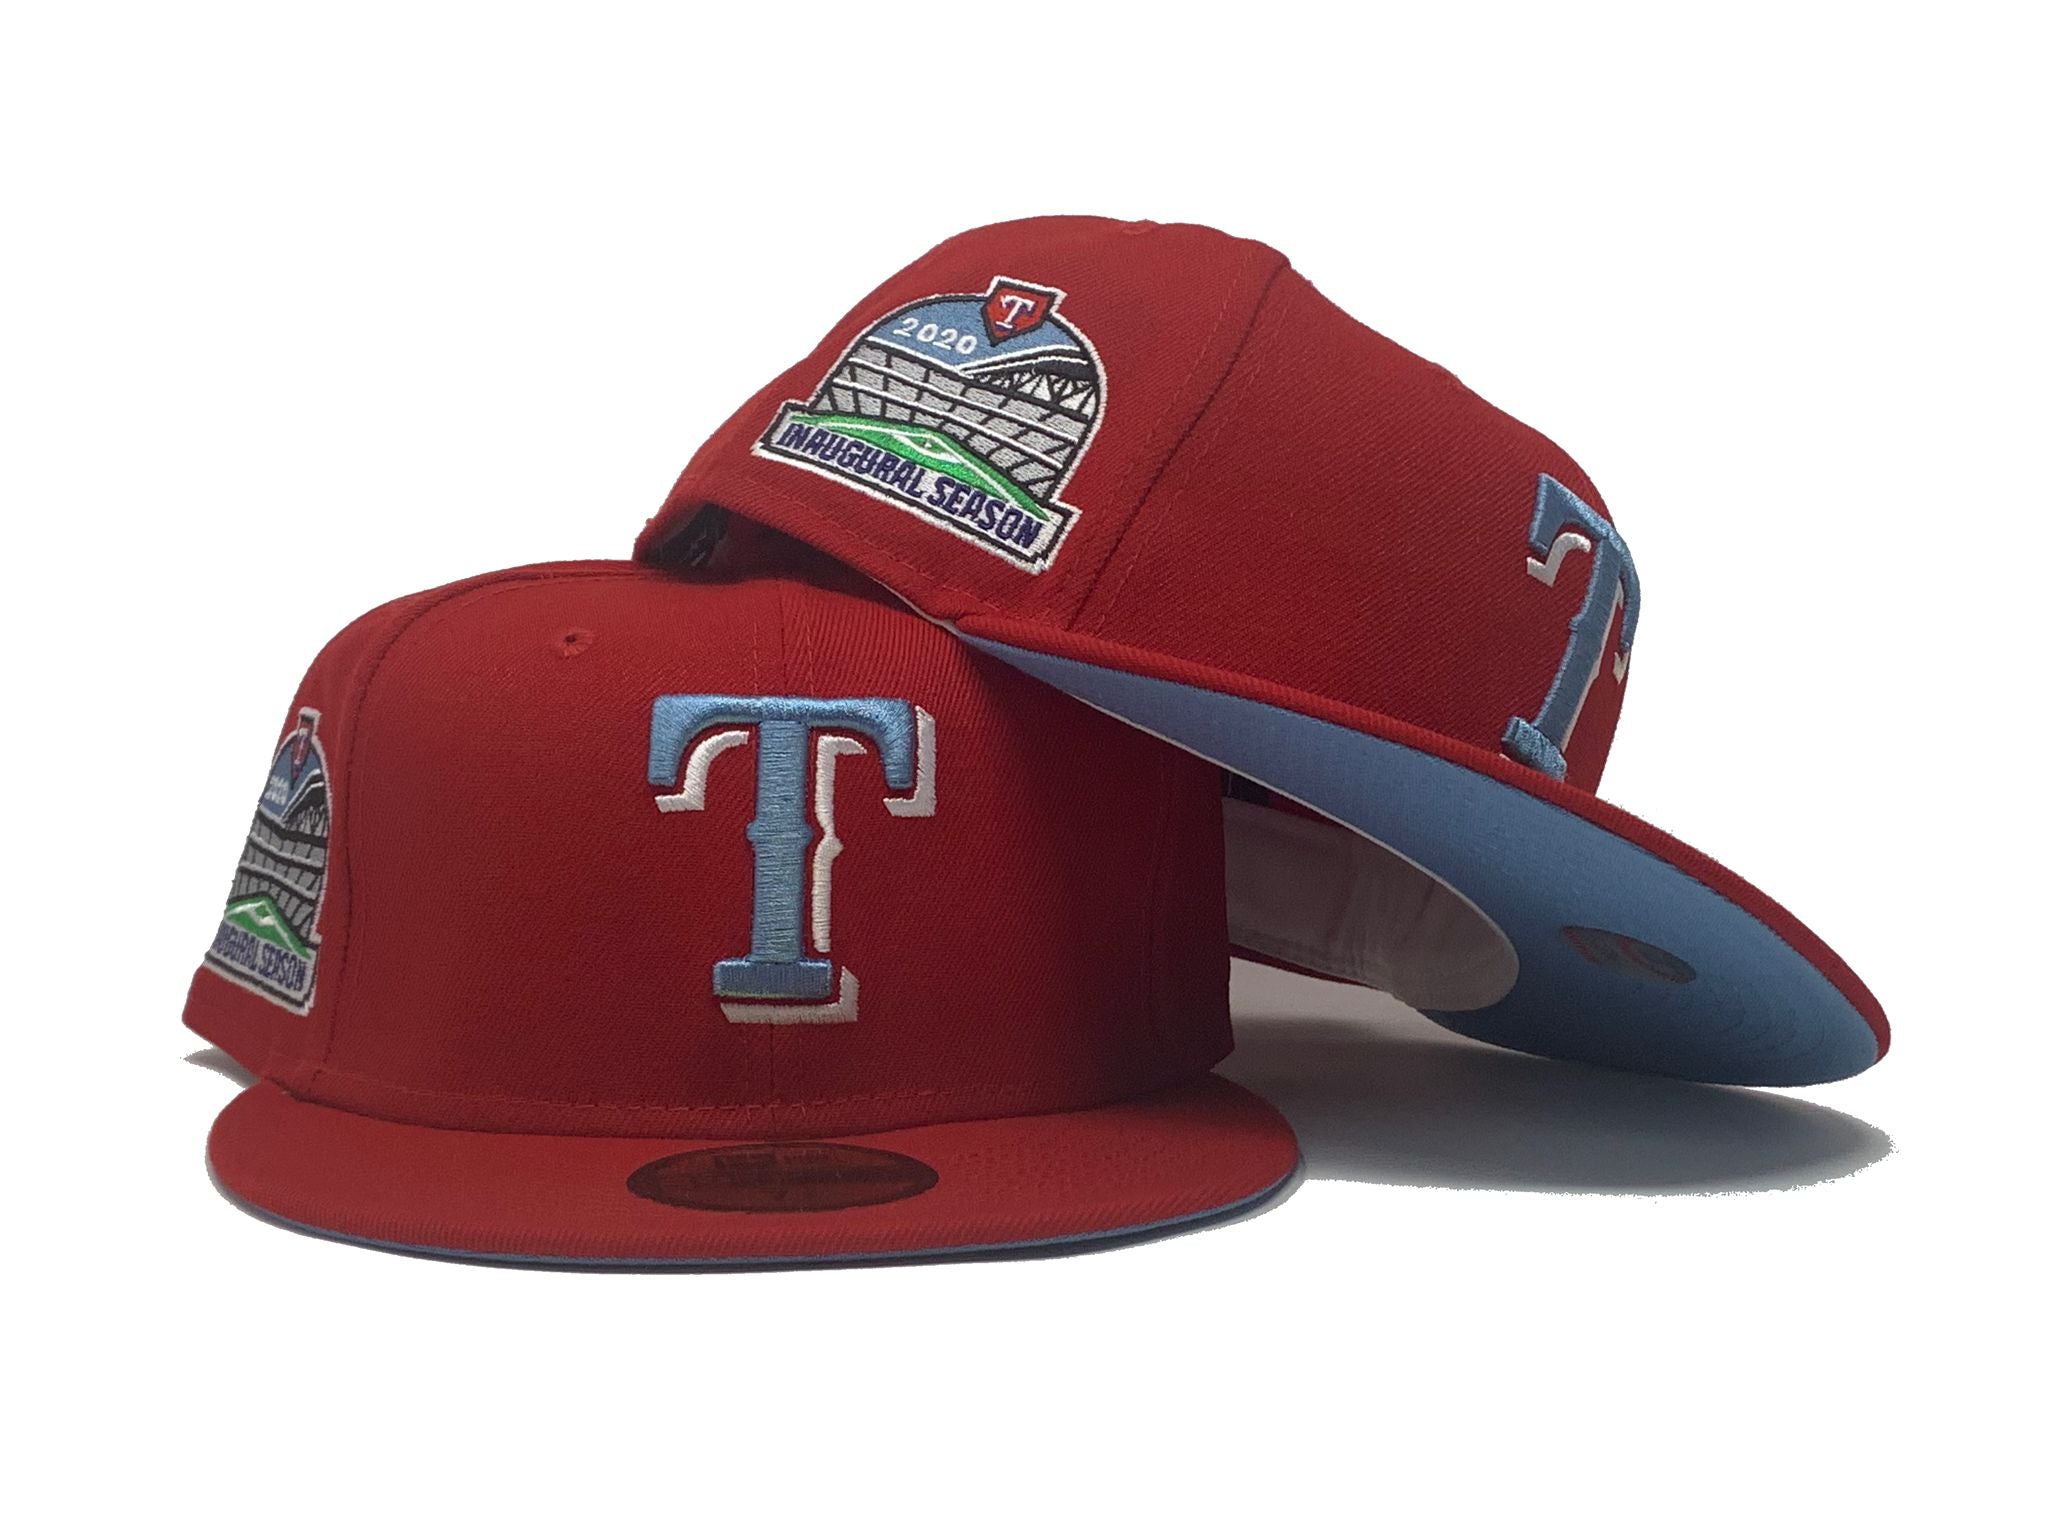 Texas Rangers New Era Team Muscle Tank Top - Red